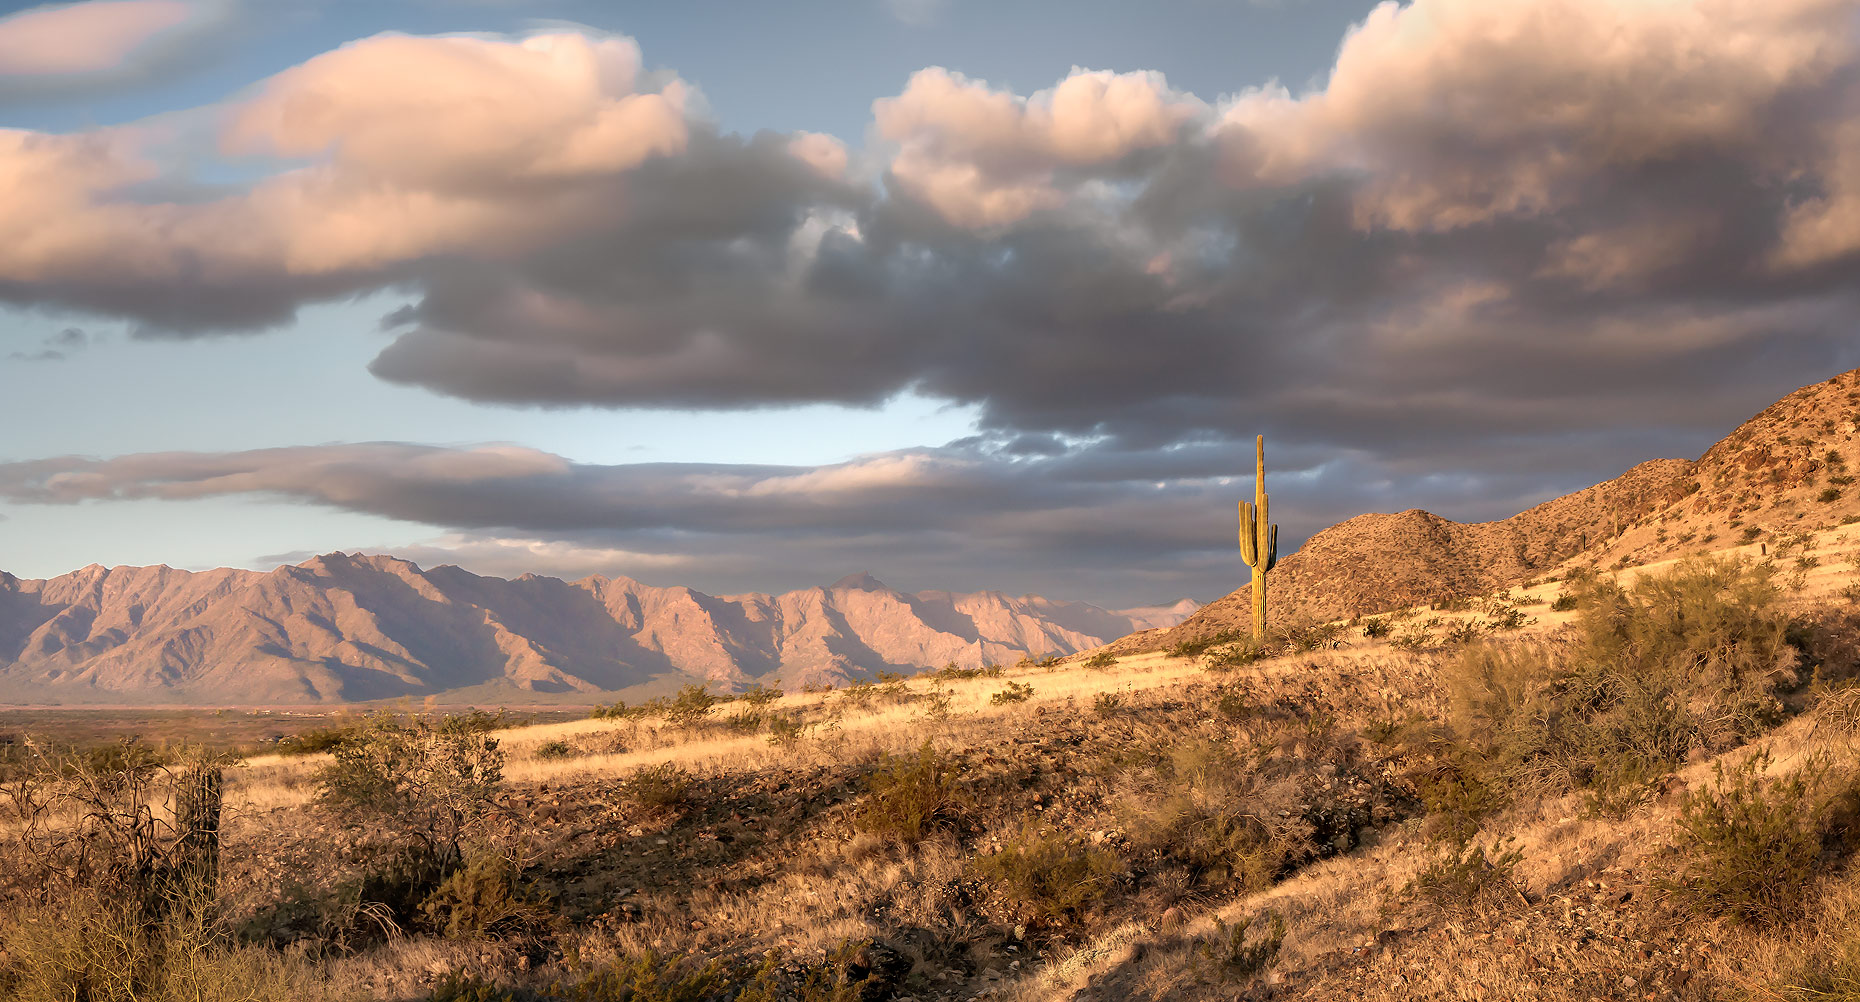 Arizona Desert - South Mountain Park & Preserve